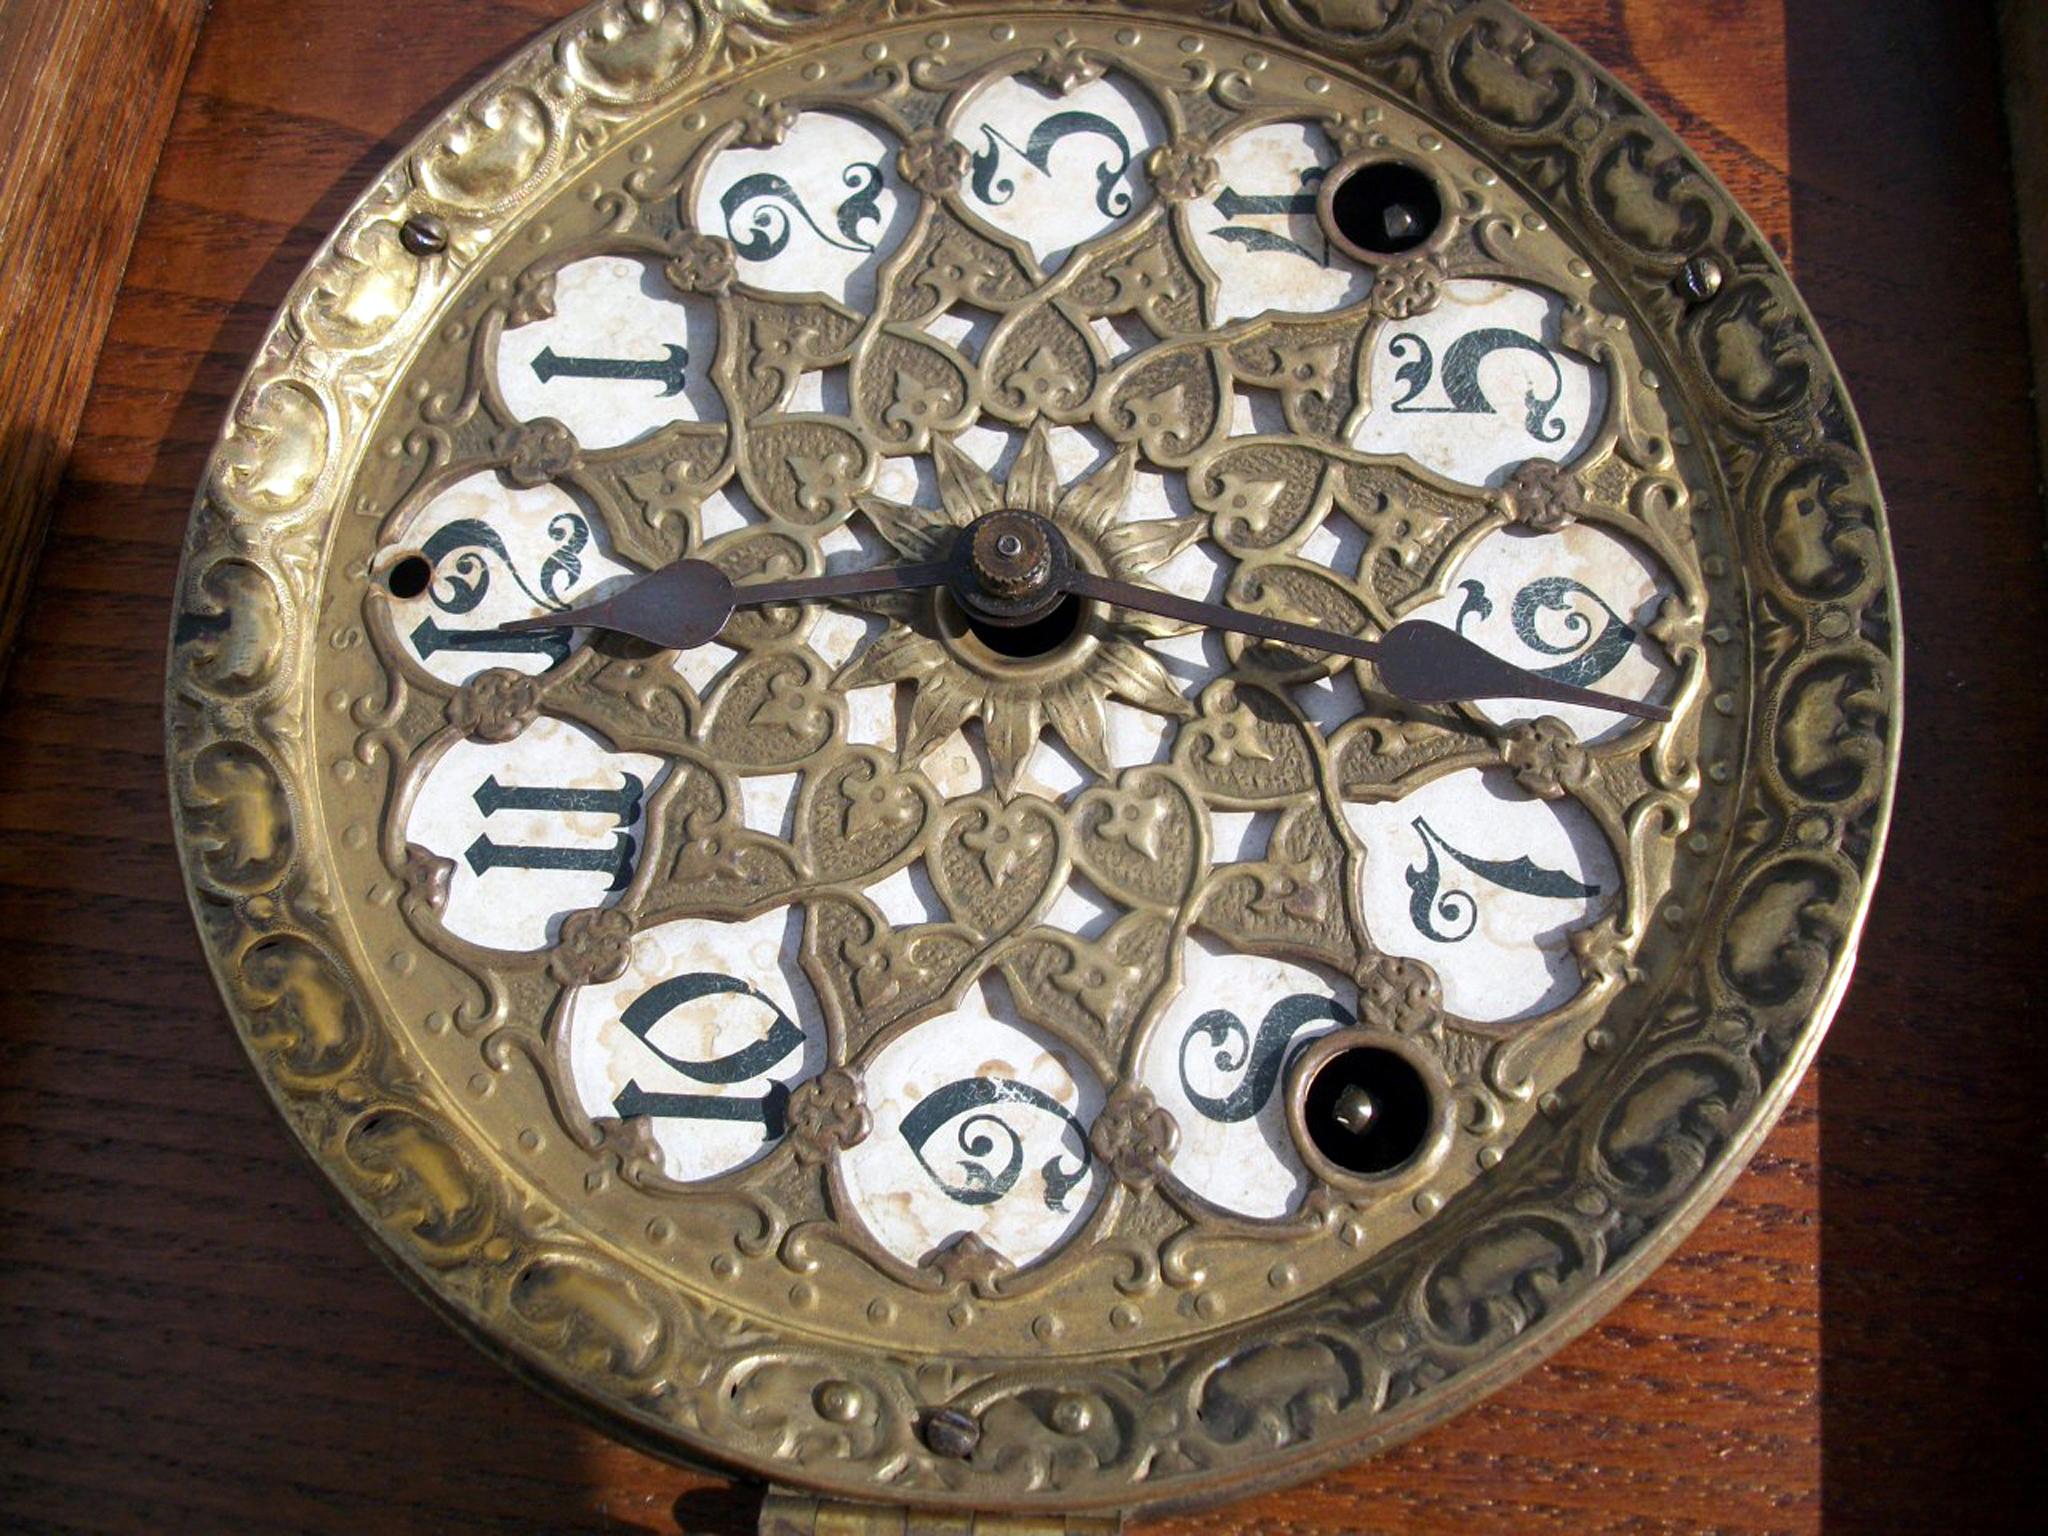 Lot 26: Vintage Mantel Clock Face Marked Sf